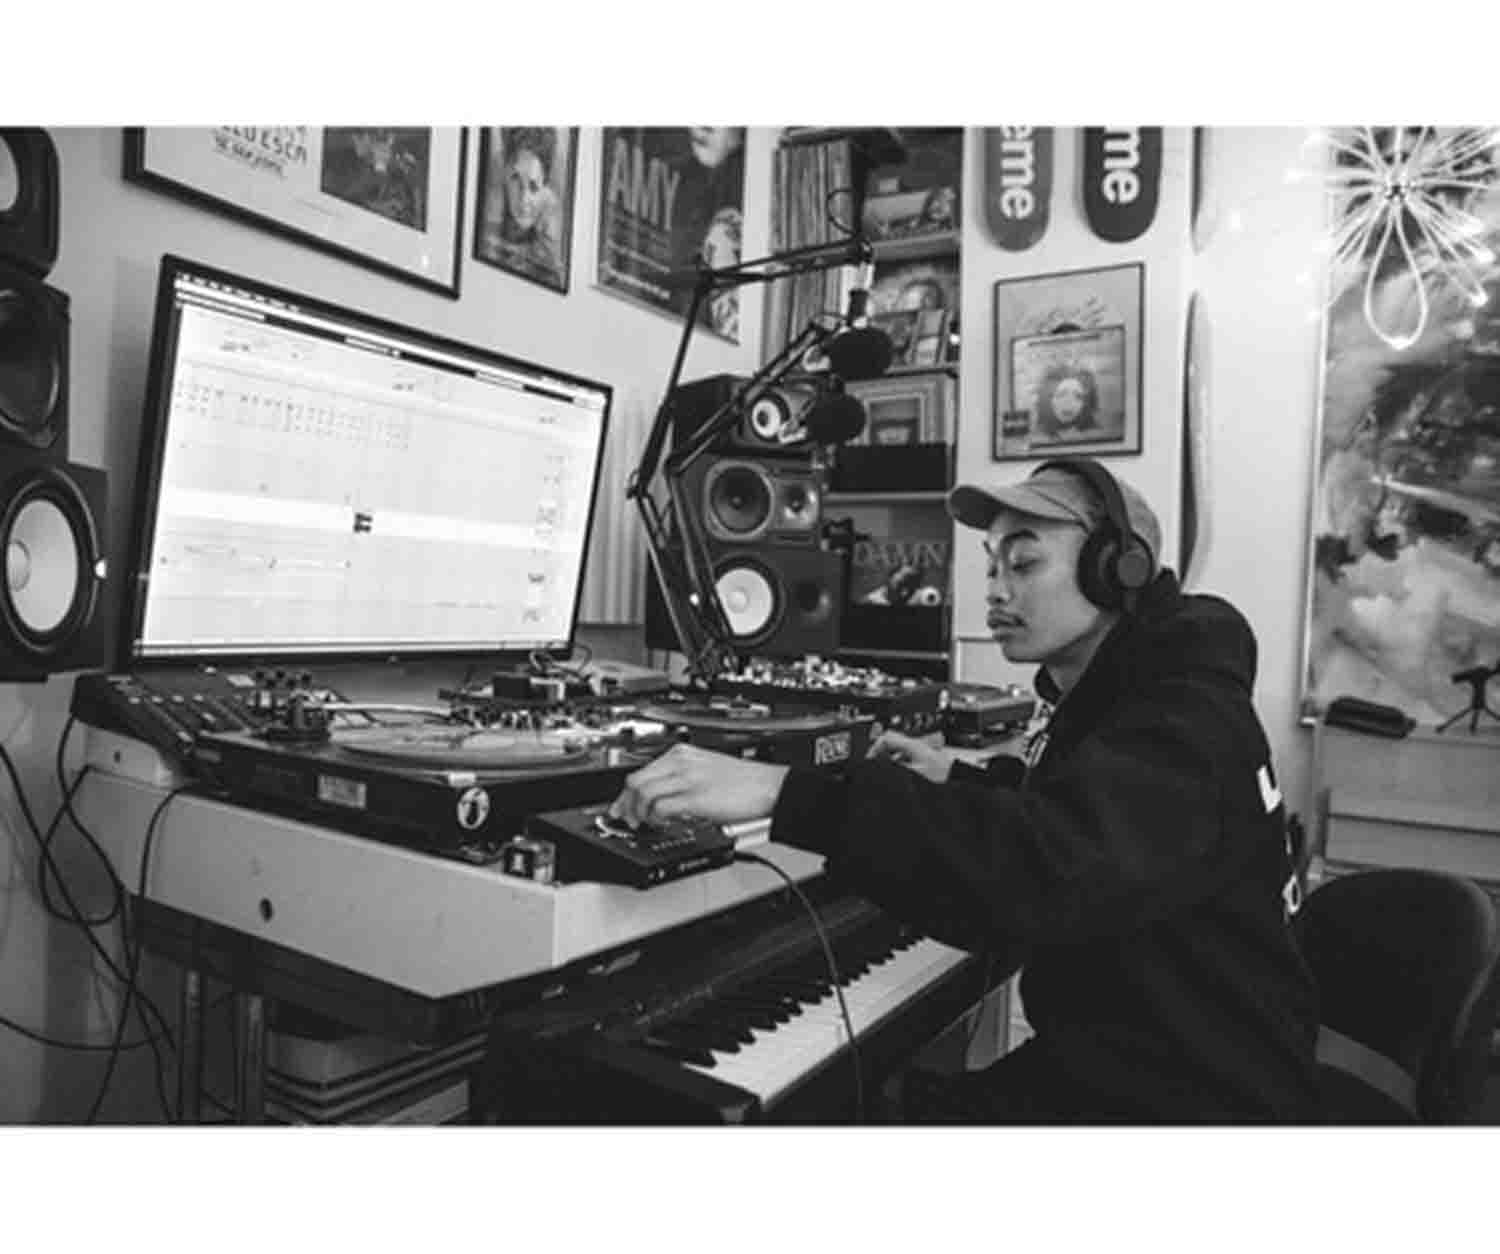 AIAIAI TMA-2 Studio XE Closed Back Over Ear Headphones - Hollywood DJ